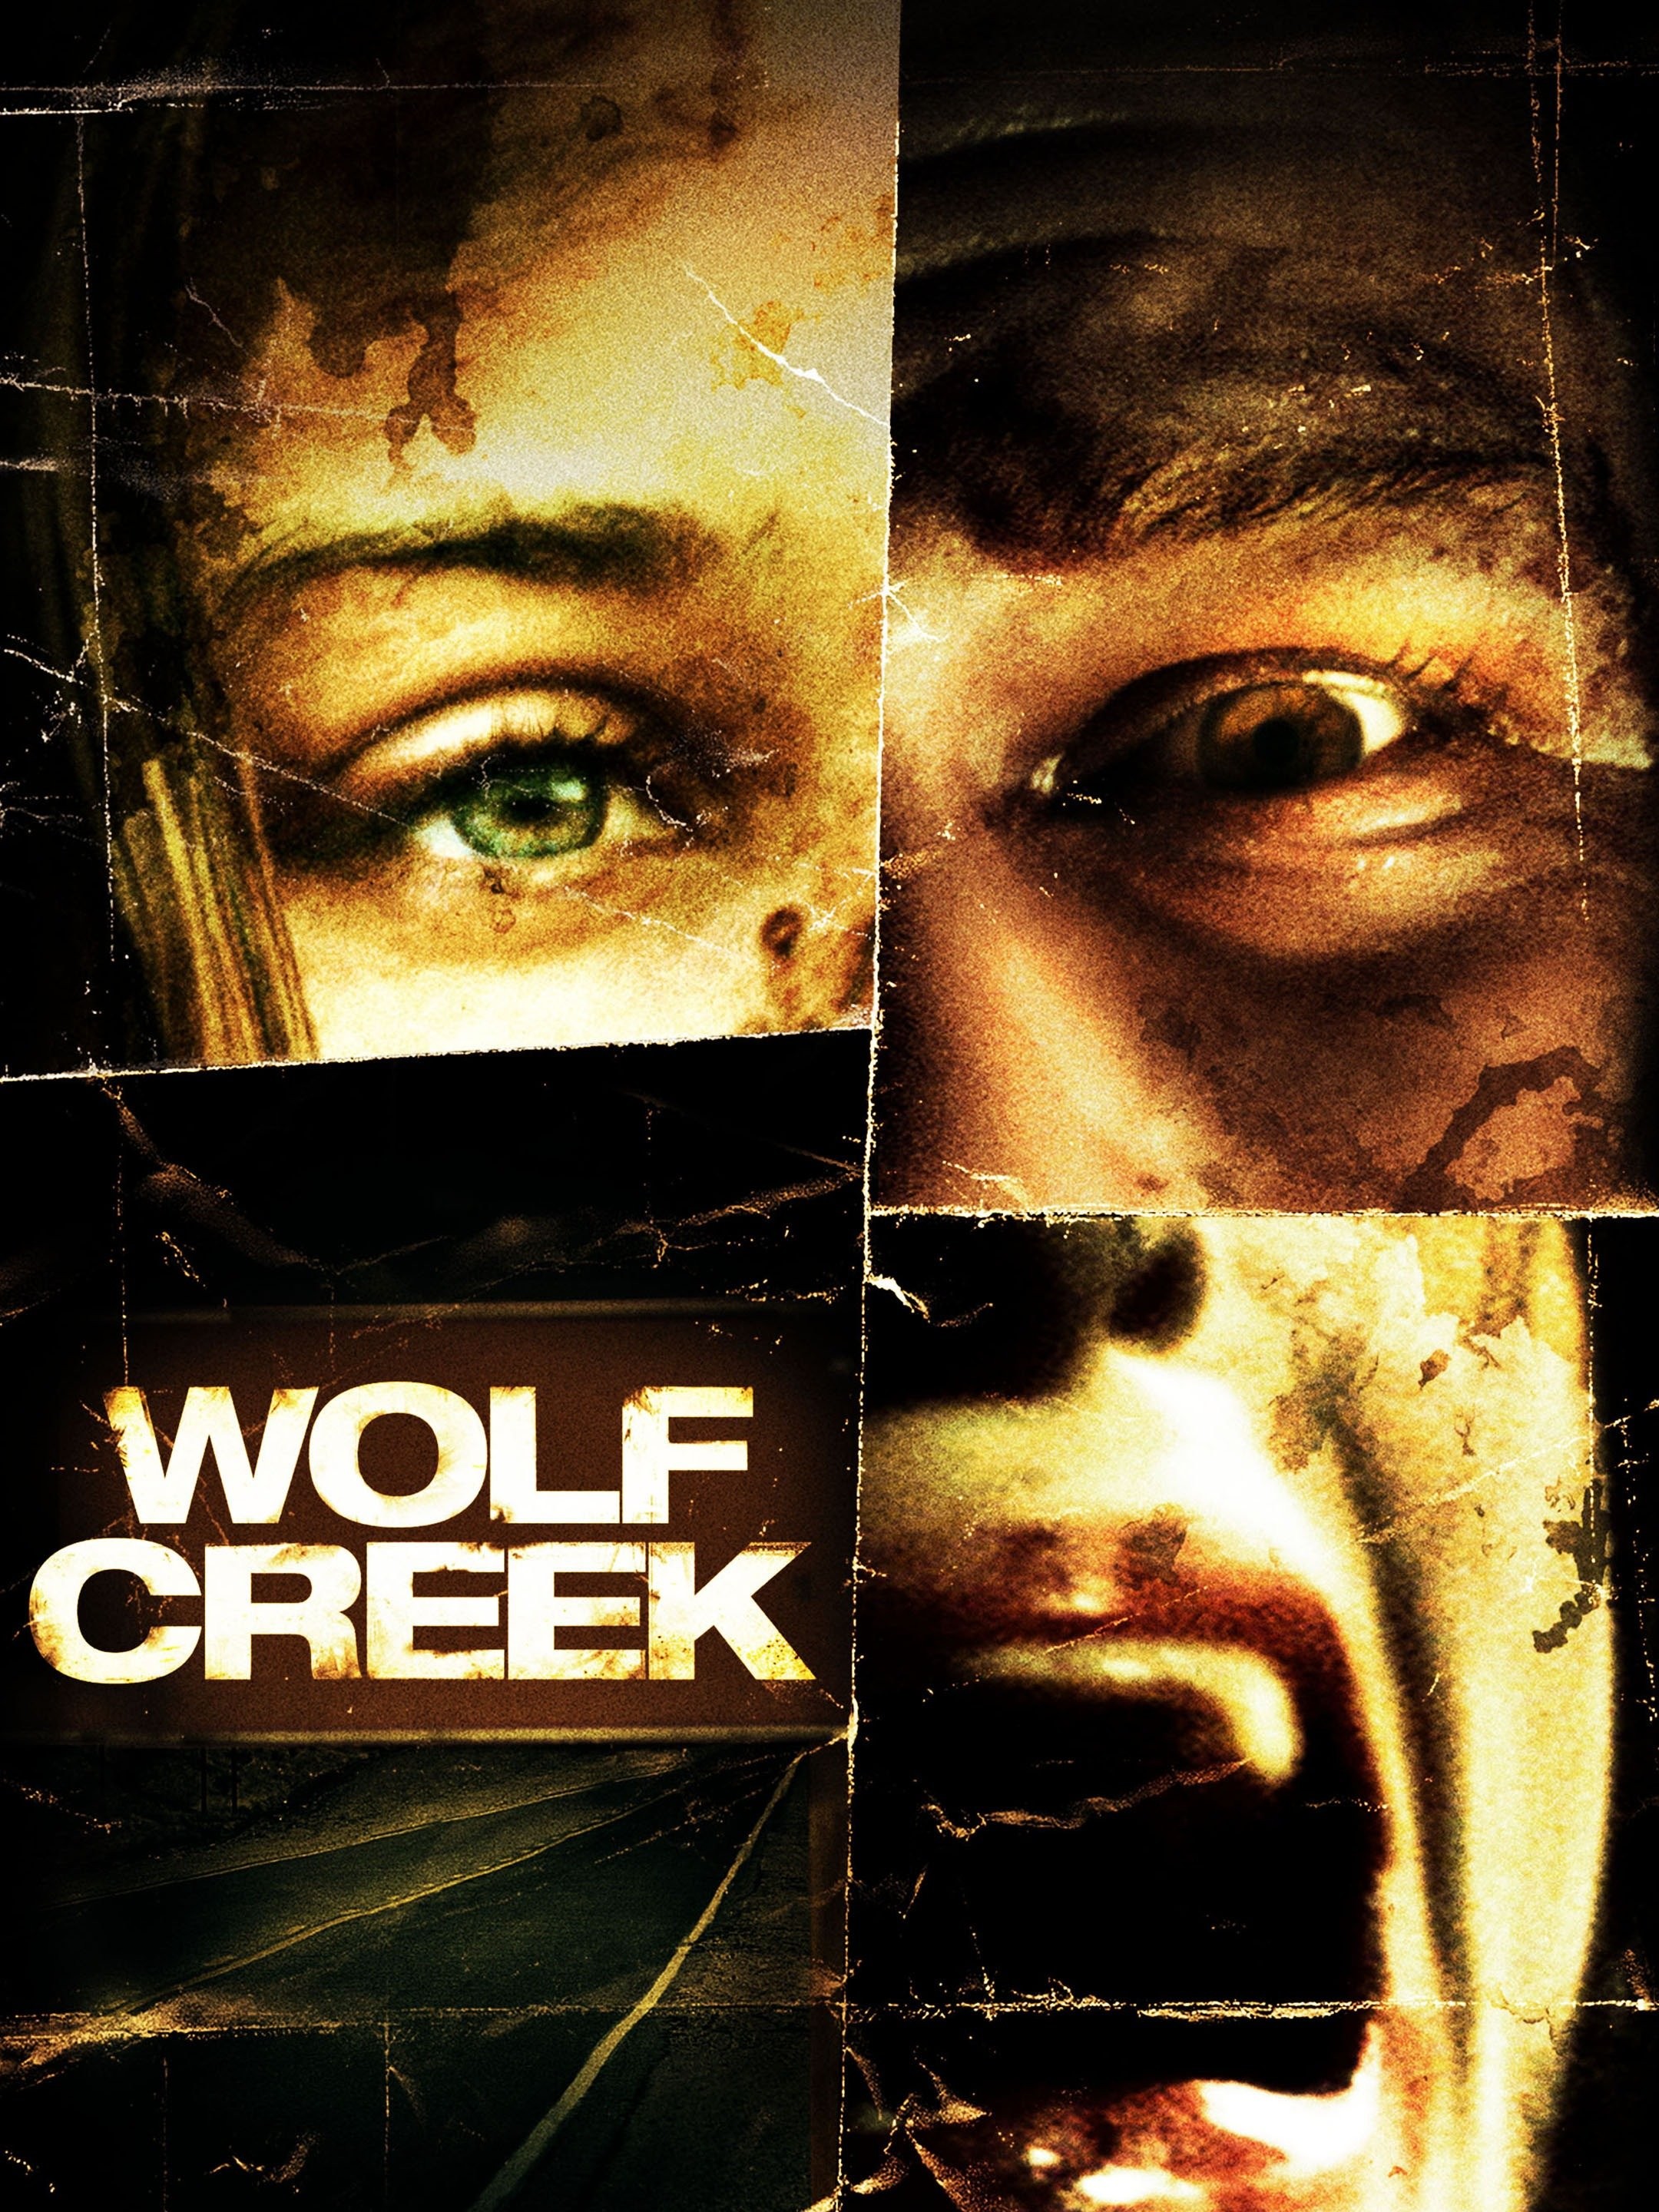 Night Wolf - Full Cast & Crew - TV Guide